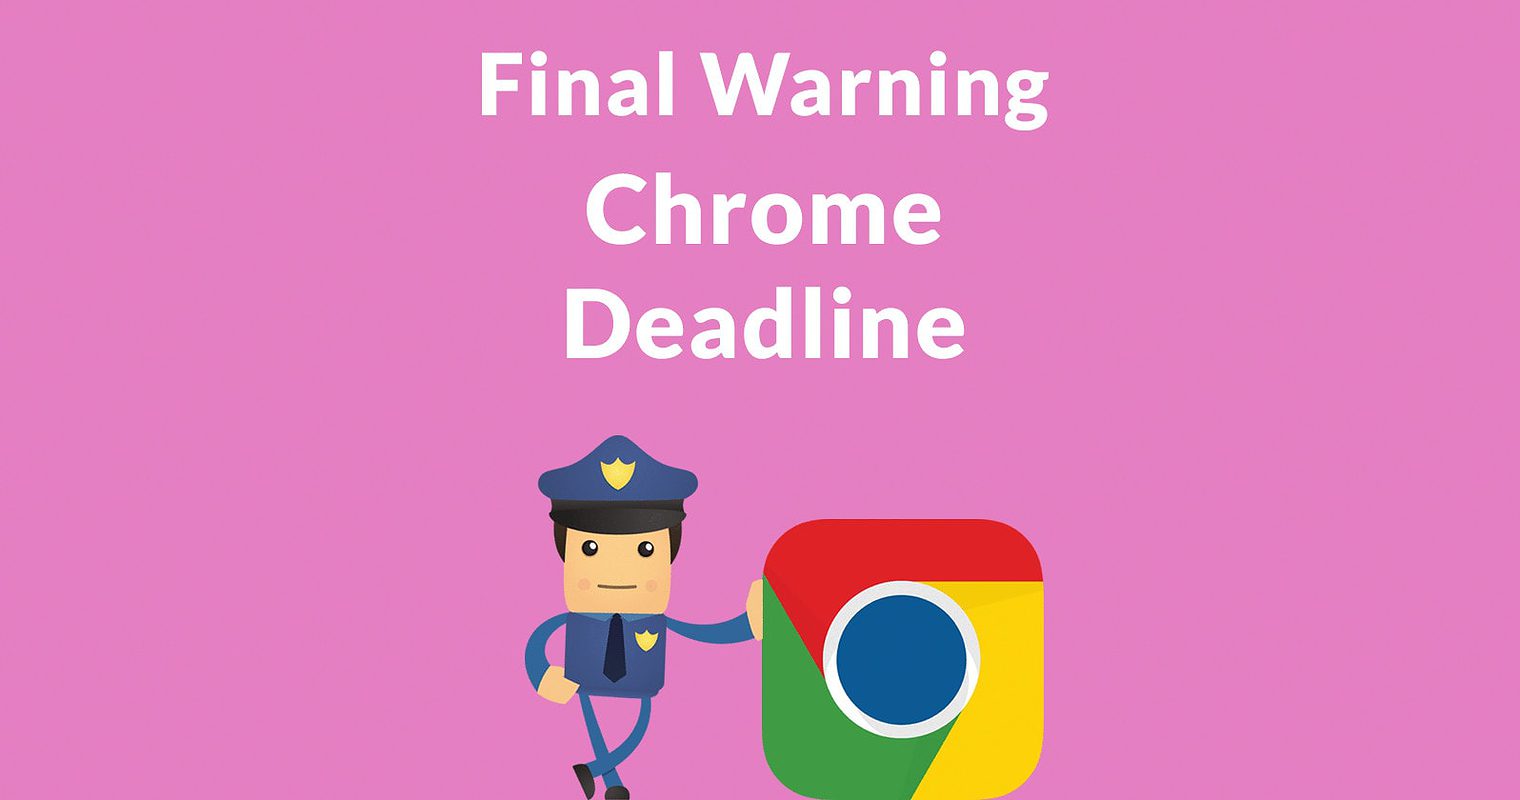 Google Chrome Issues Final Warning on HTTPS